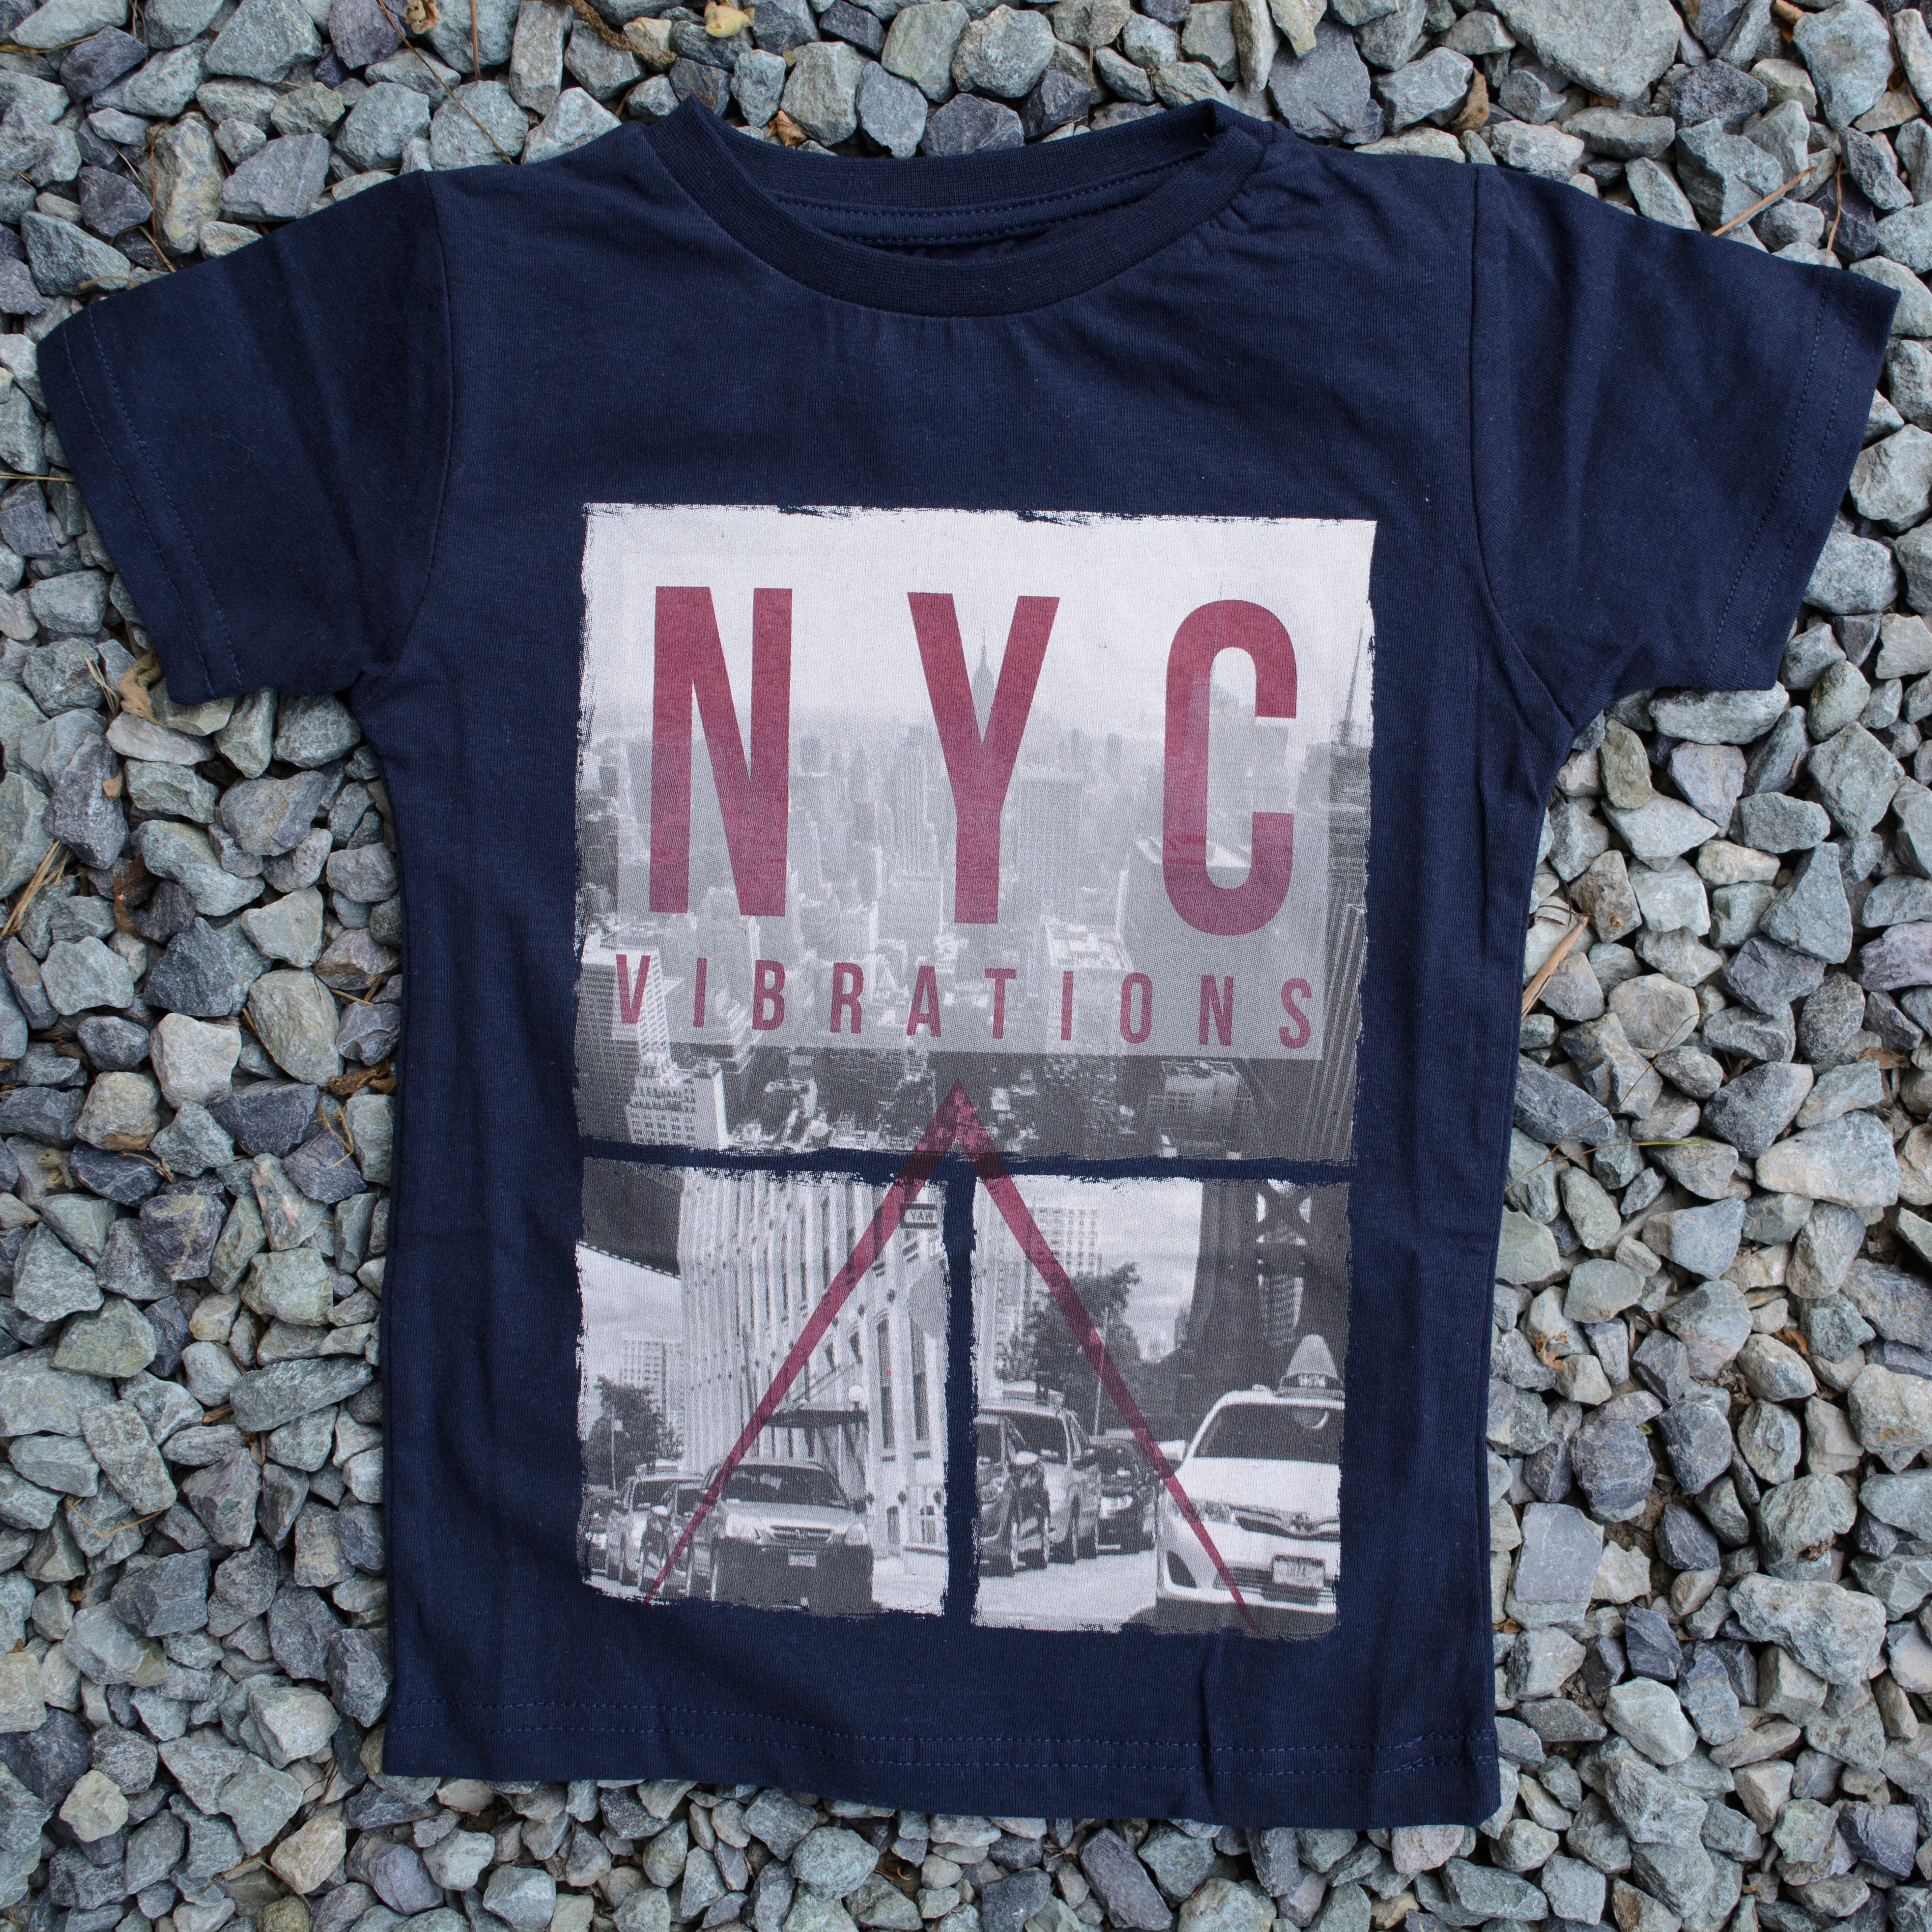 NYC Vibrations - Children's T-Shirt Outfits - T-Shirt for 2,7 Years Children's, Orange & Navy T-Shirt - Wear Sierra